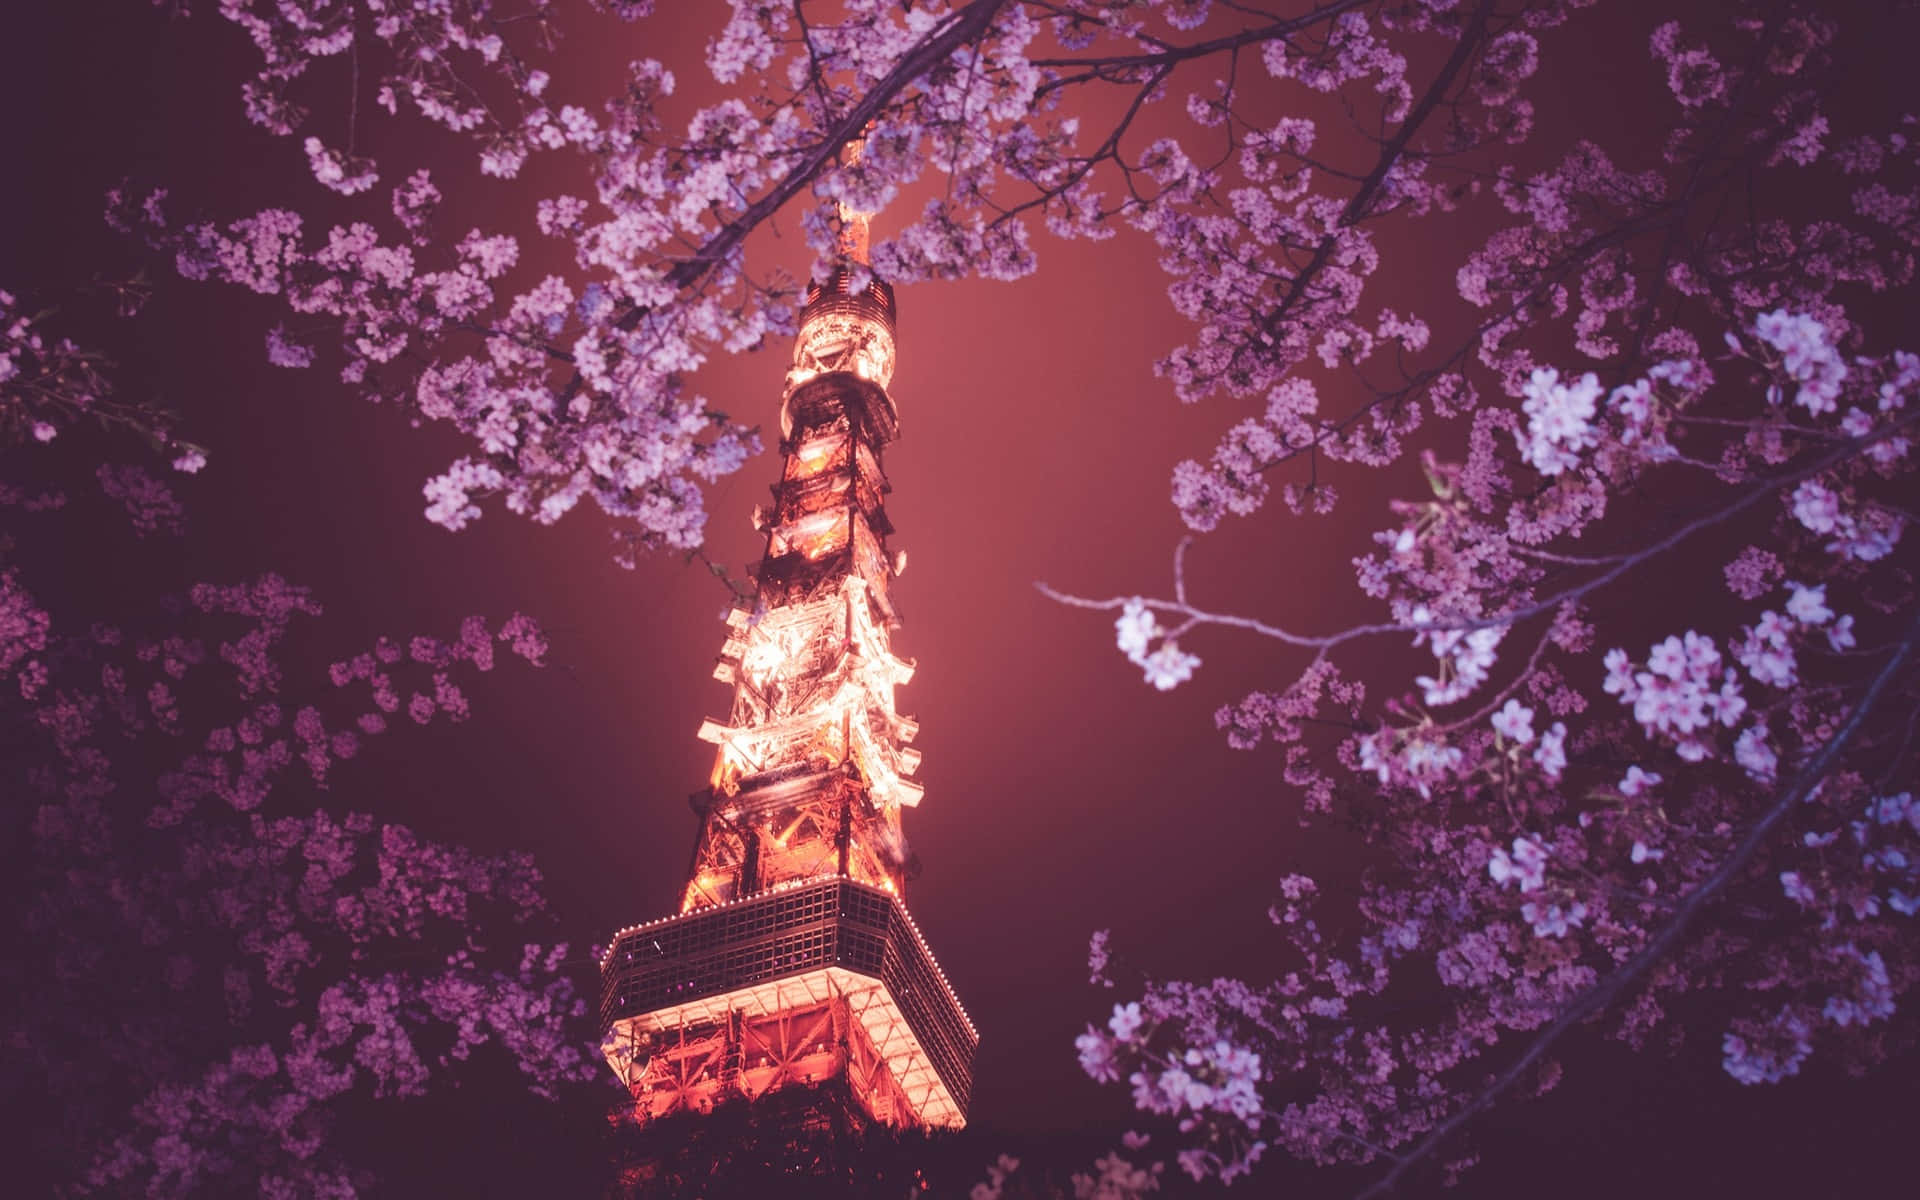 Fondode Pantalla De Tokio Con La Torre De Tokio Sobre Un Árbol De Sakura.